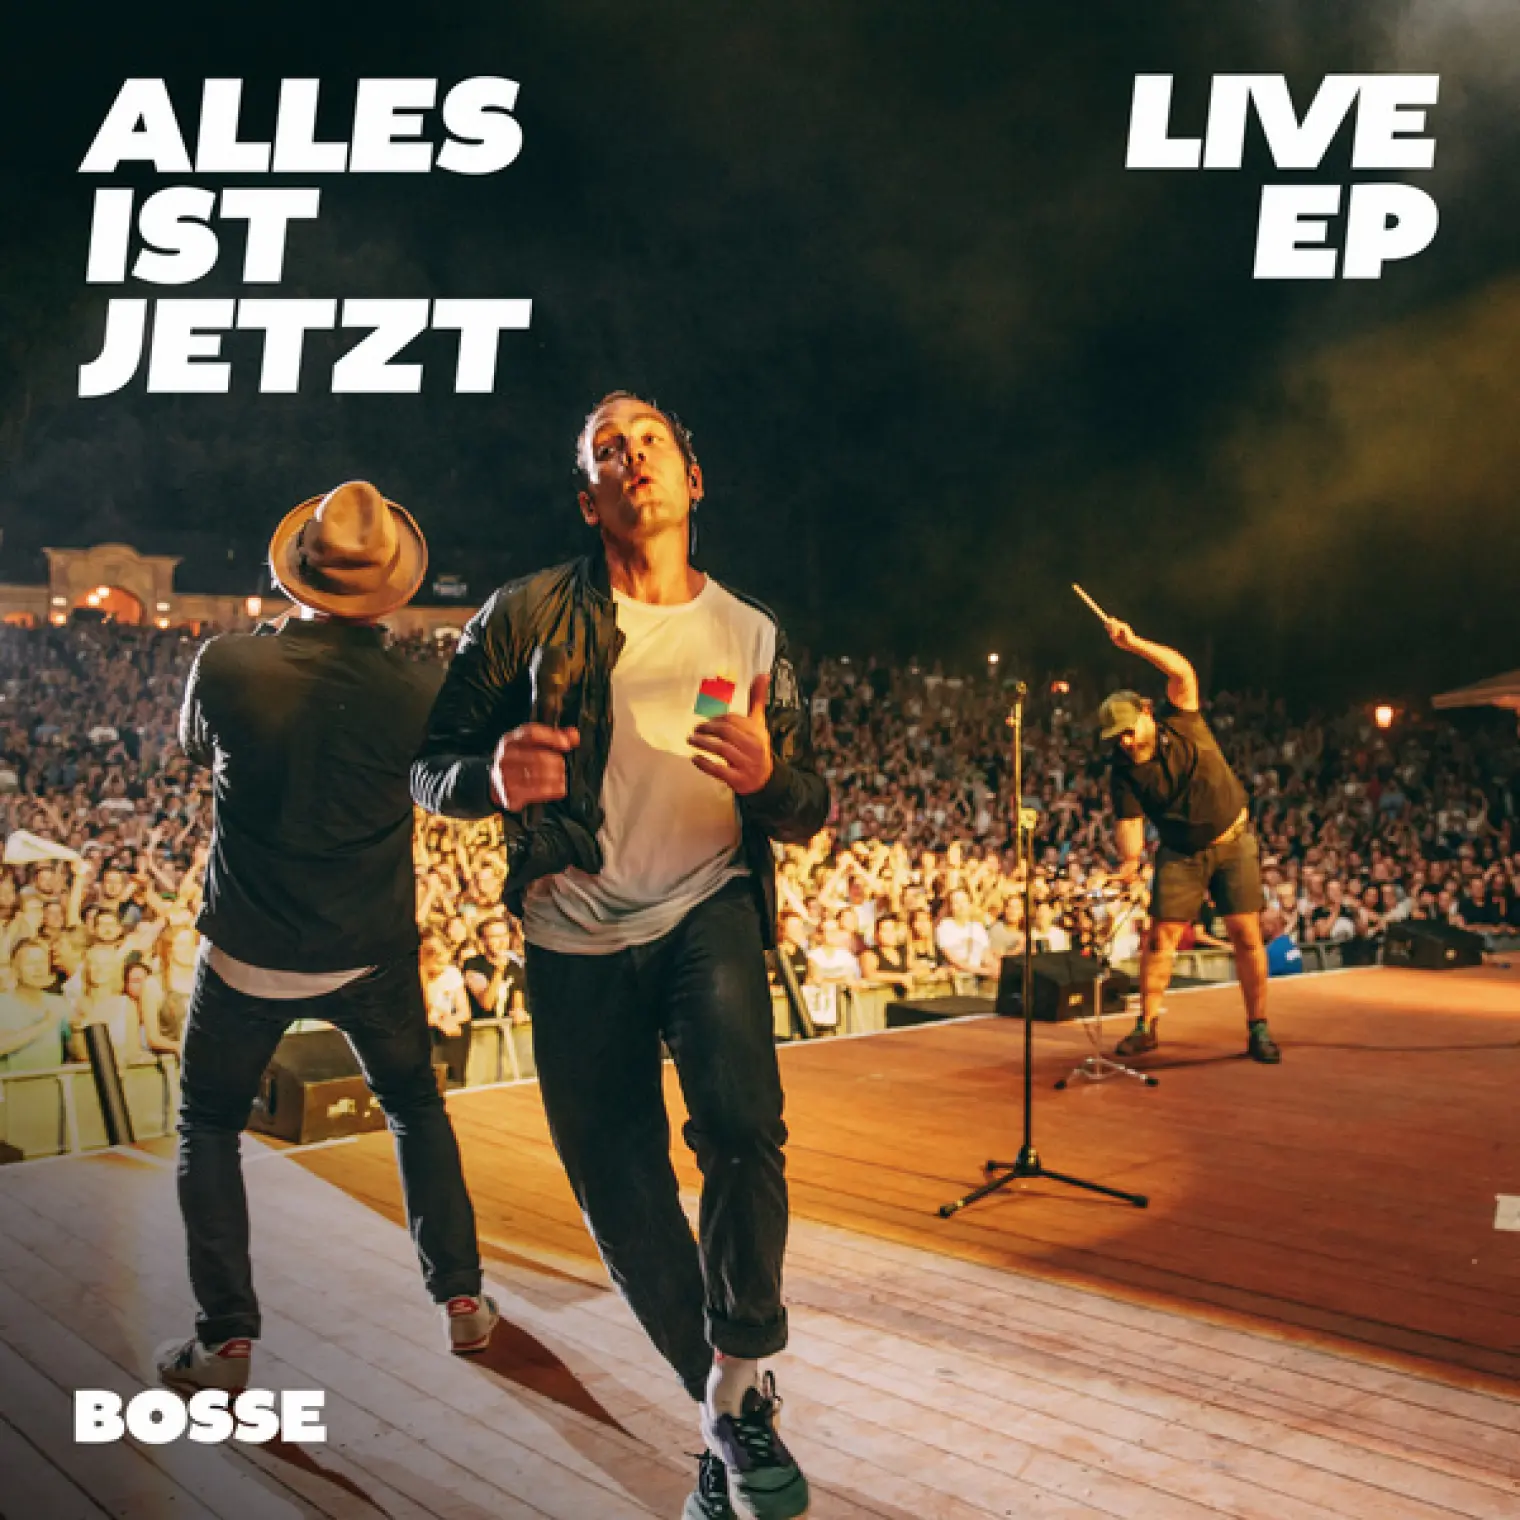 Alles ist jetzt Live EP -  Bosse 